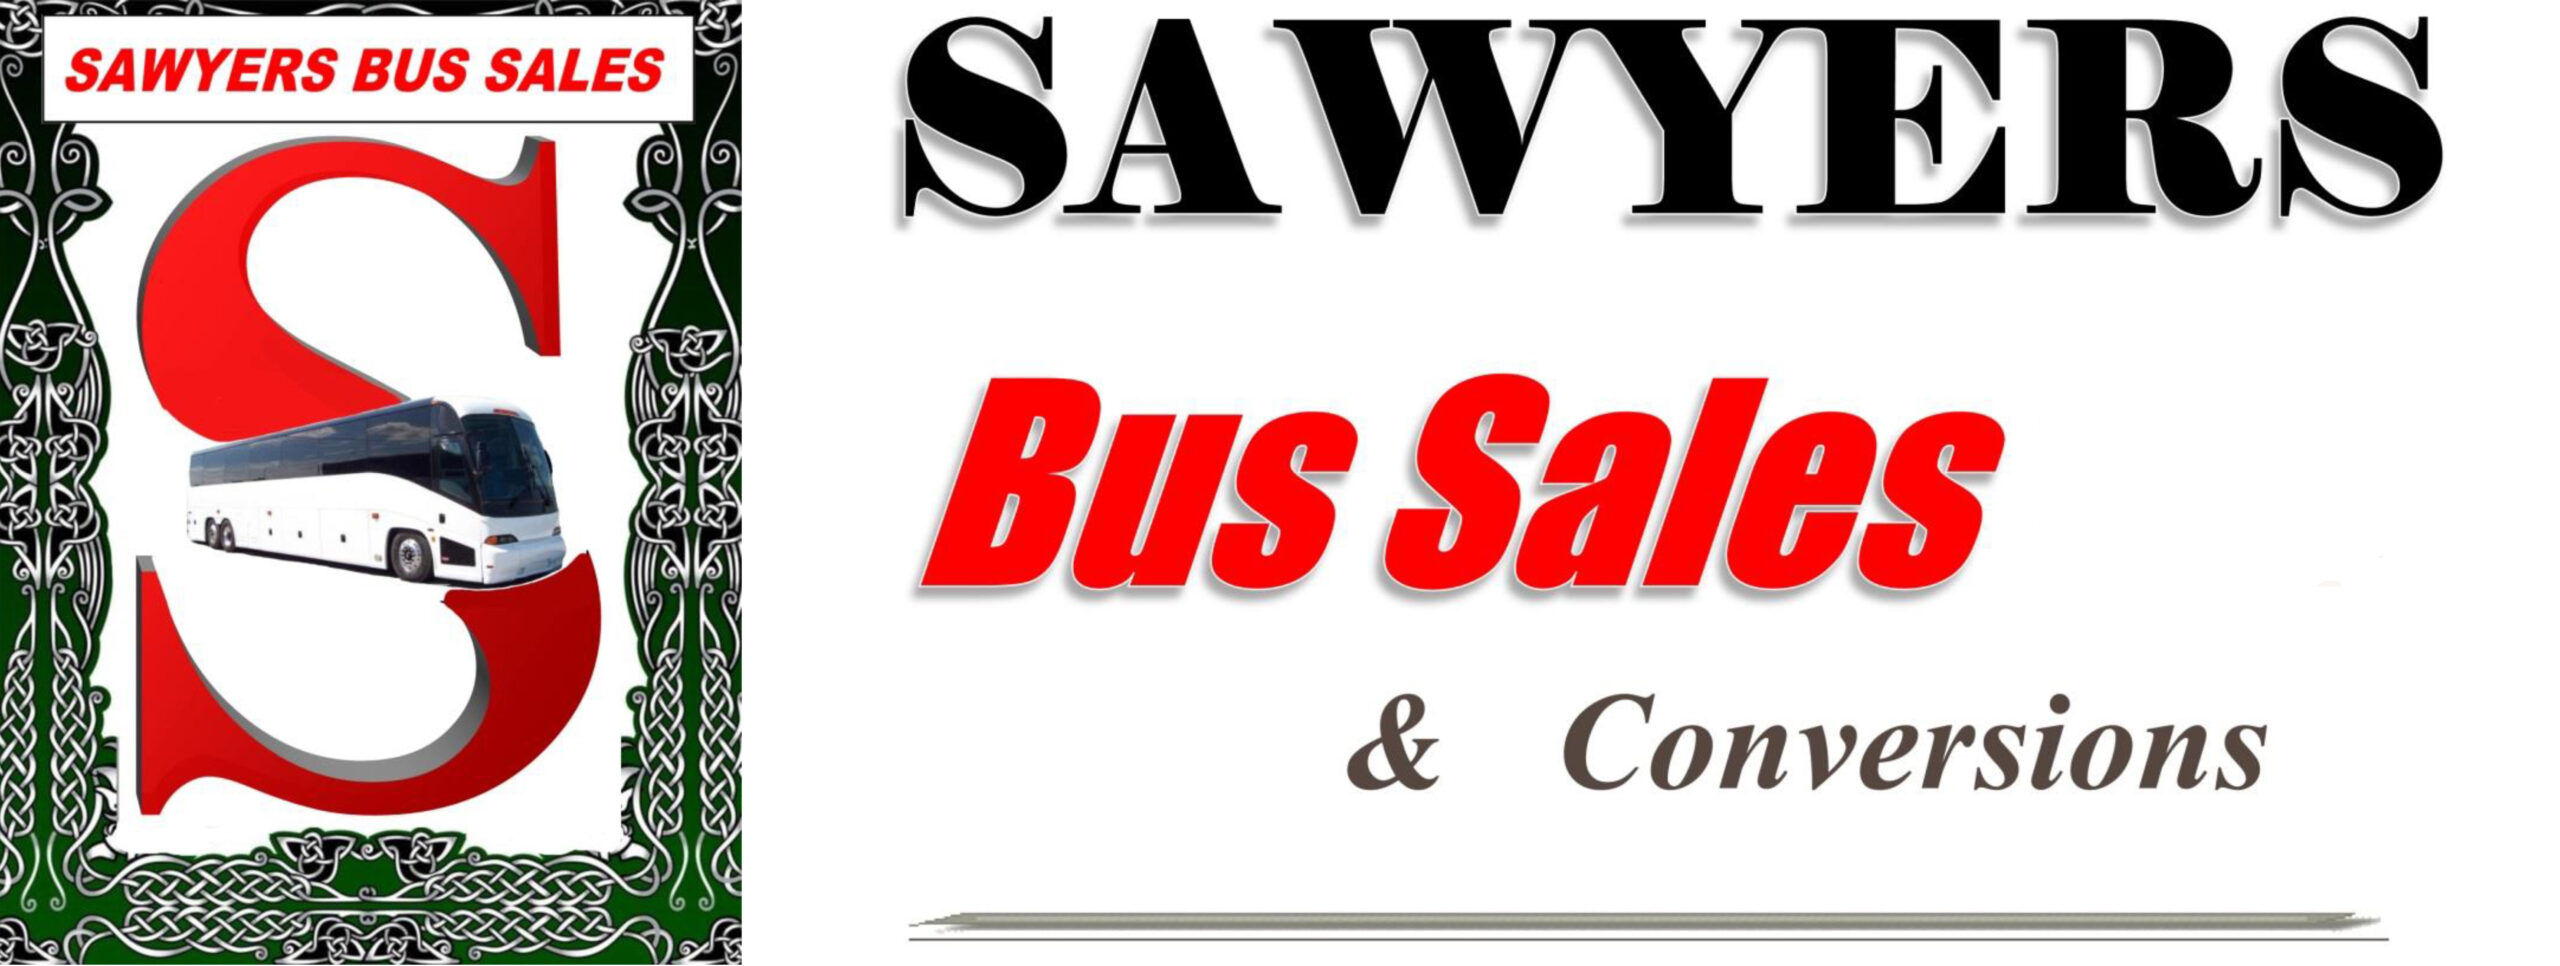 Sawyers Bus Sales & Conversions